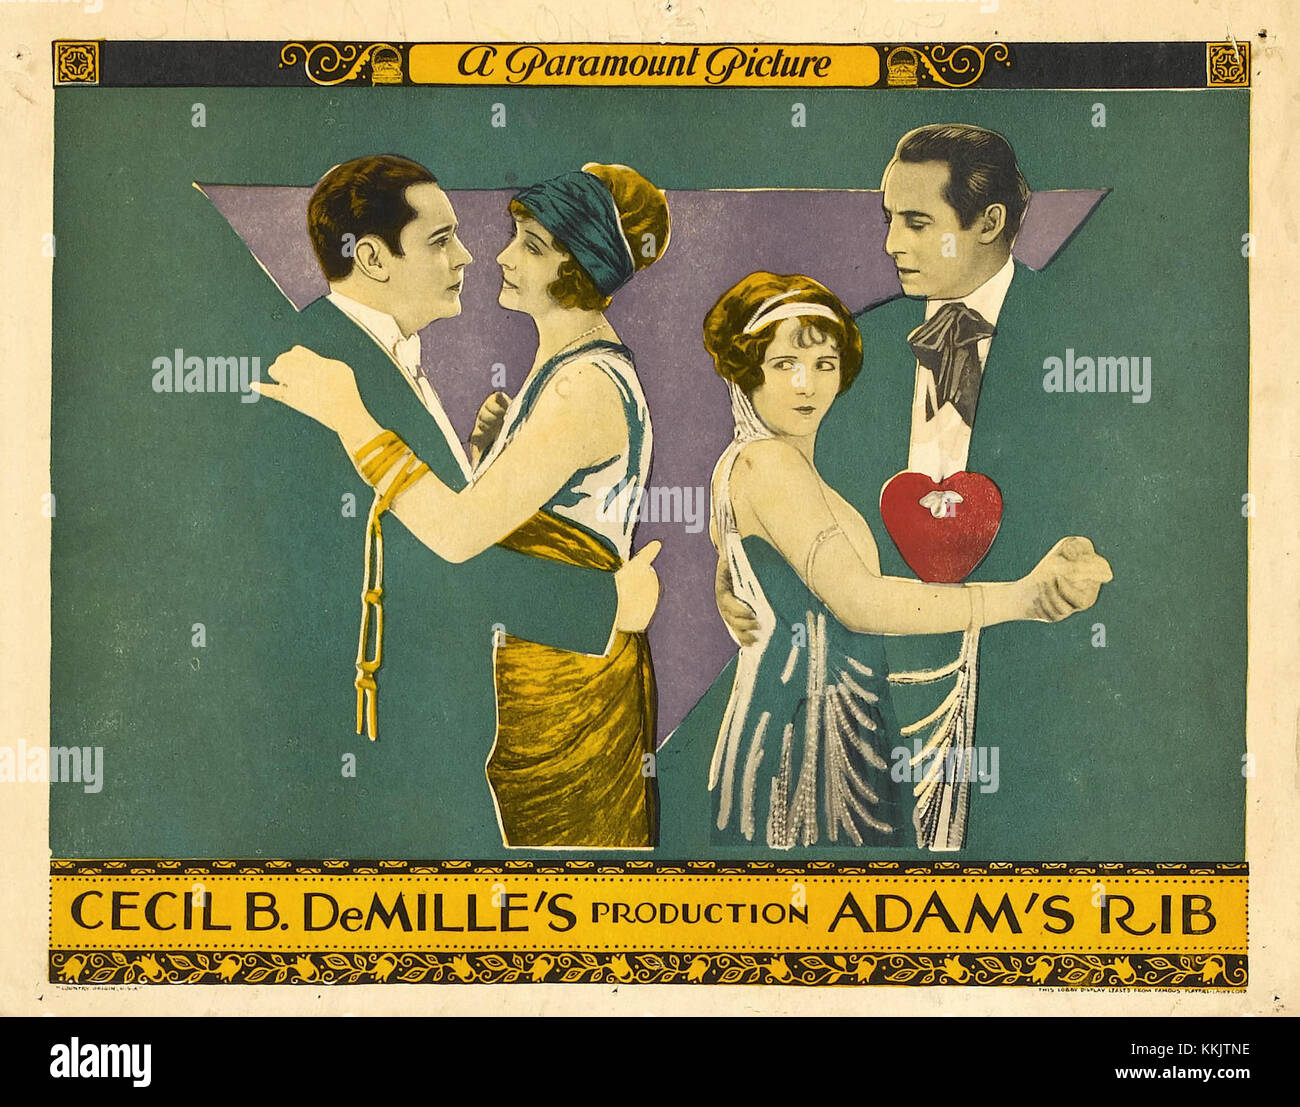 Adamsrib-lobbycard-color-1923 Foto Stock